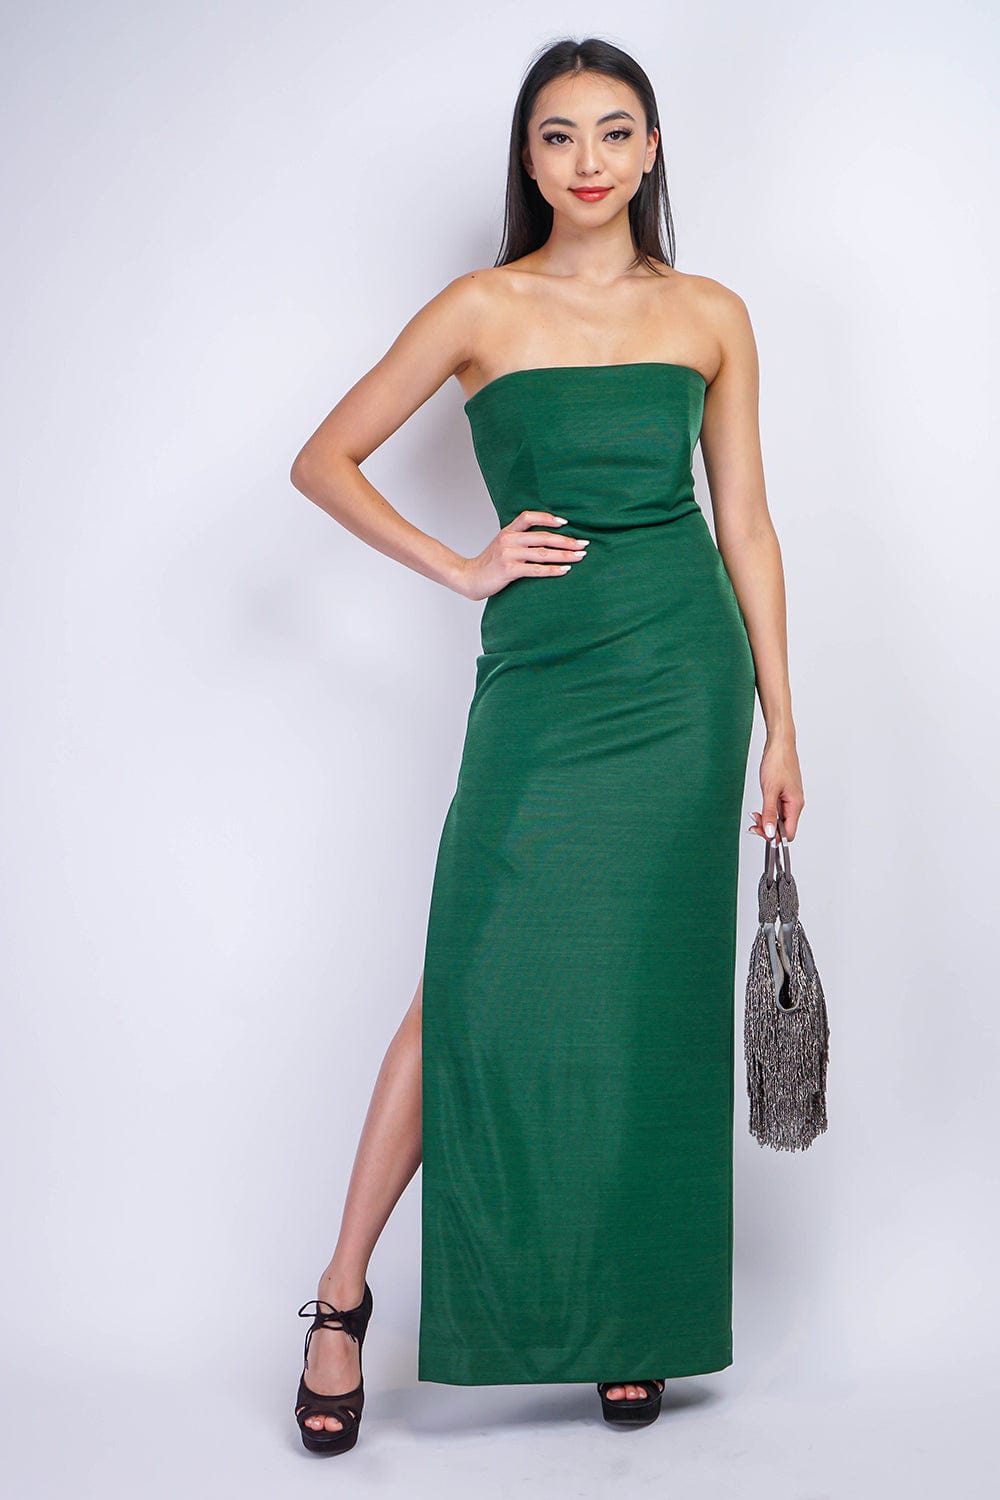 GOWNS Emerald Green Luxe Sheen Strapless Gown - Chloe Dao